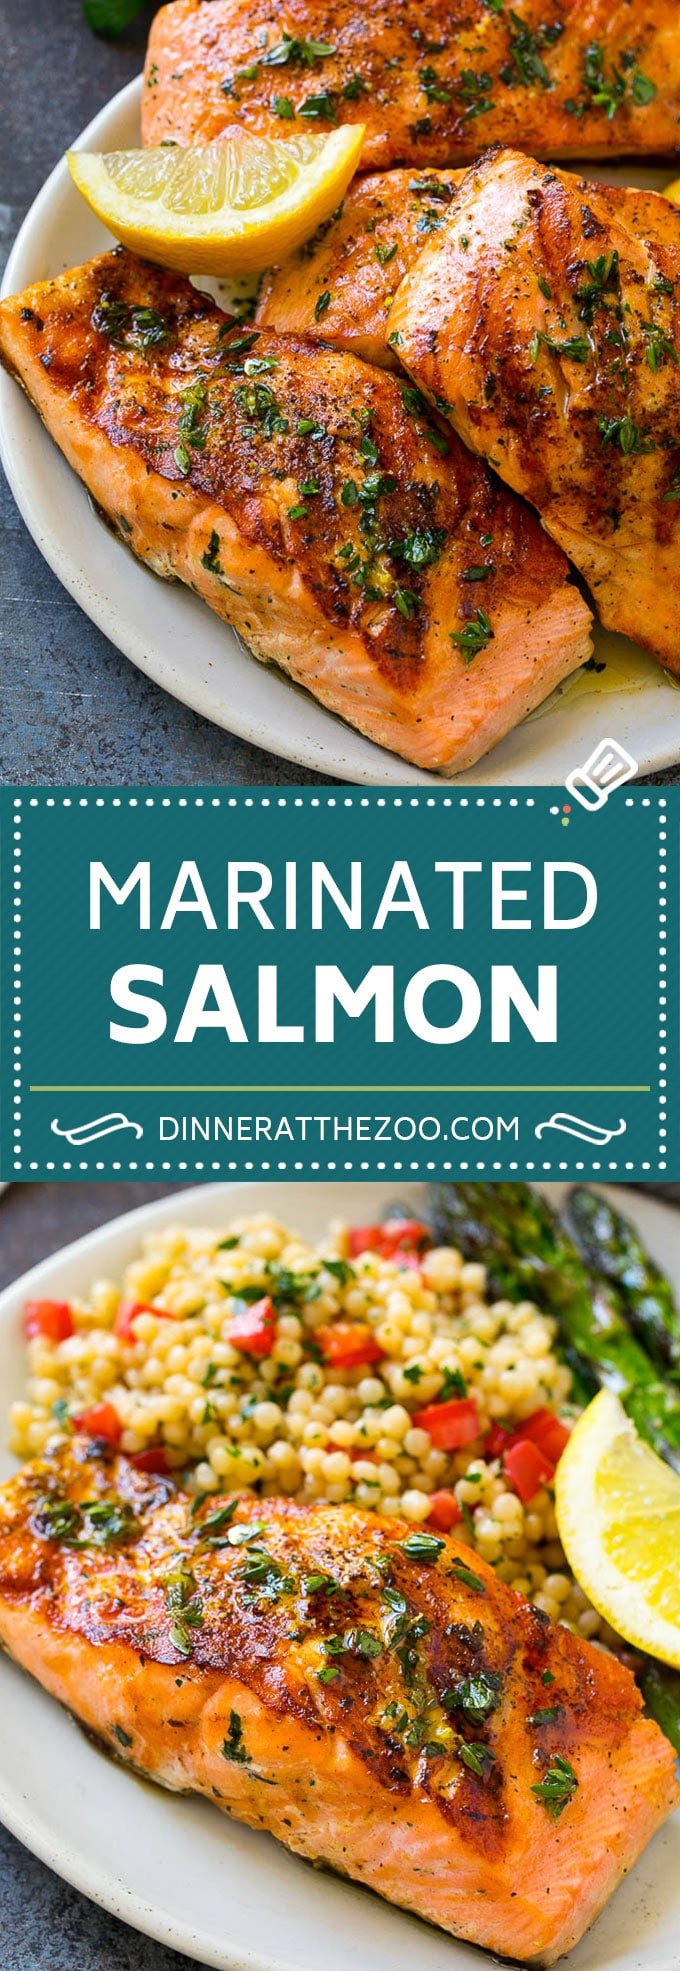 Marinated Salmon Recipe | Grilled Salmon | Garlic and Herb Salmon #salmon #grilling #marinade #fish #dinner #dinneratthezoo